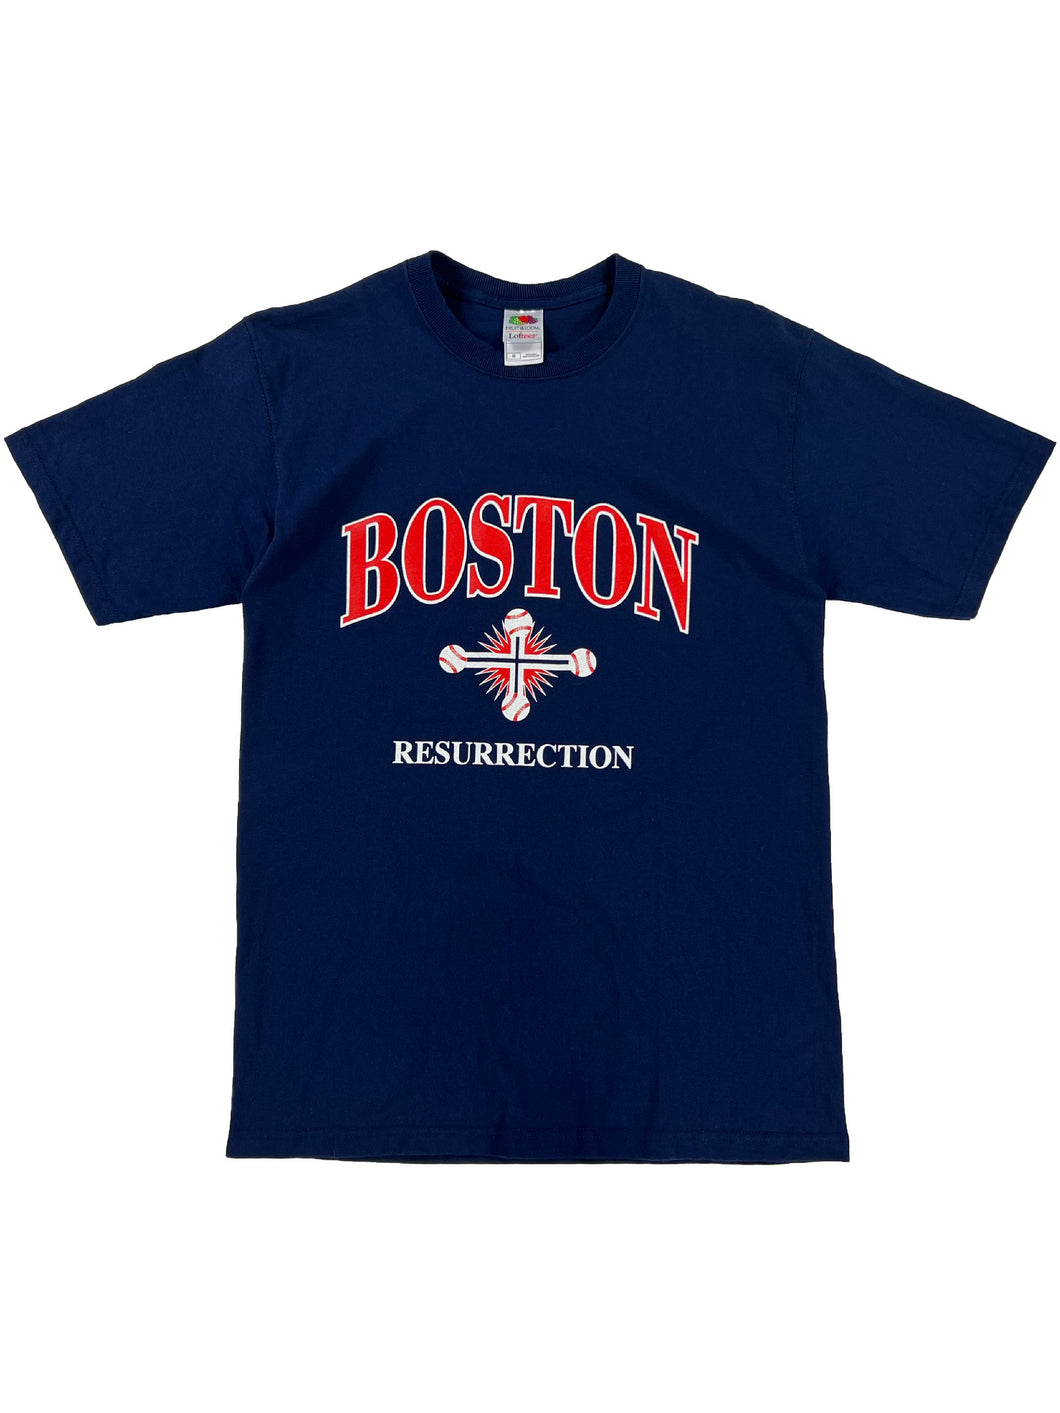 2004 Boston Red Sox Resurrection curse tee navy (M)